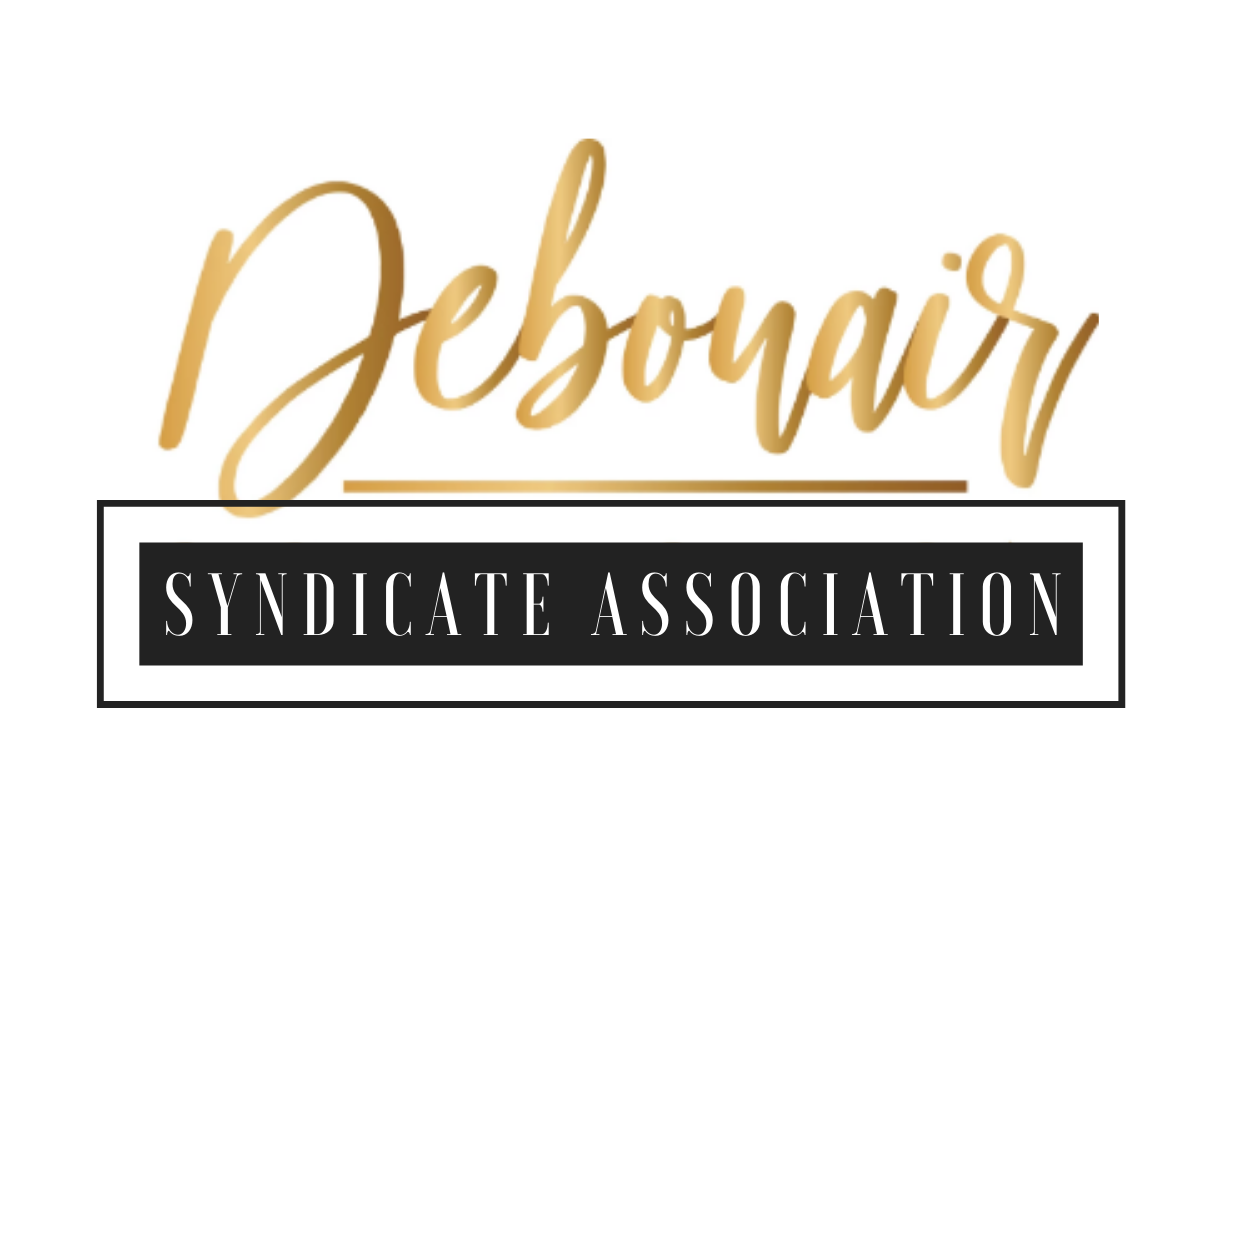 Debonair Syndicate Association